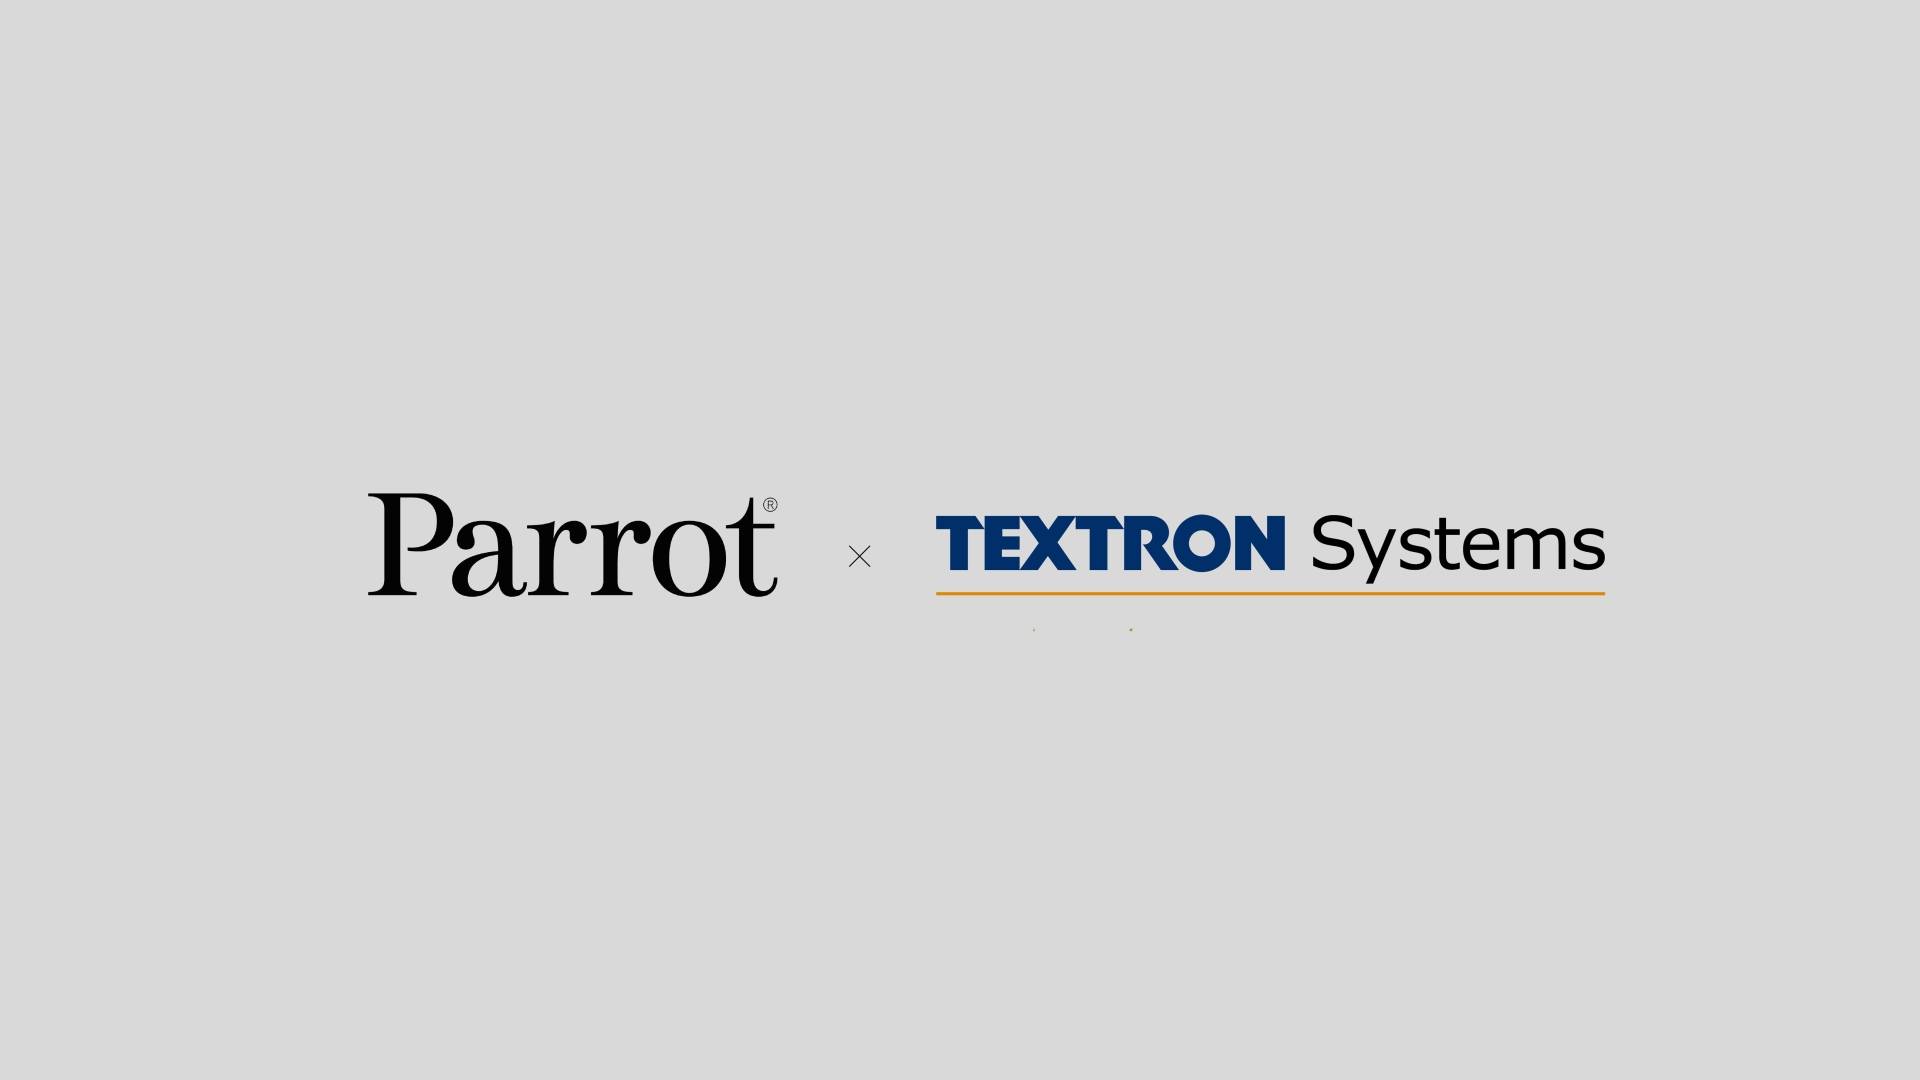 Parrot x Textron